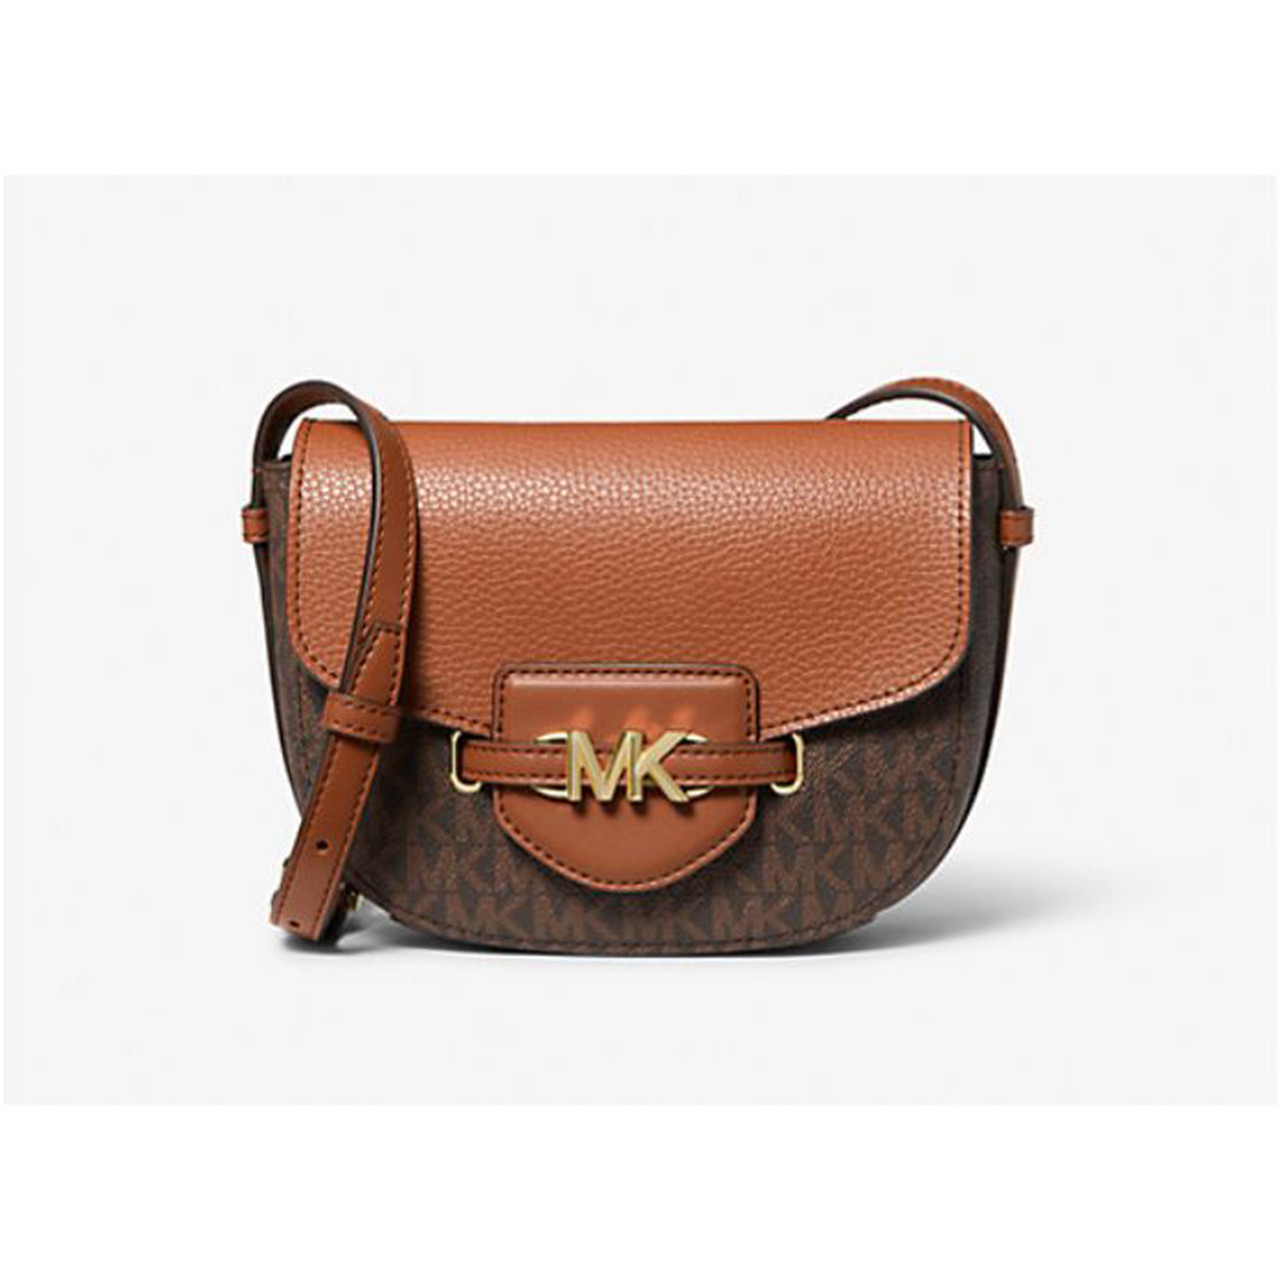 Michael Kors women's leather crossbody bag Brown-Leather